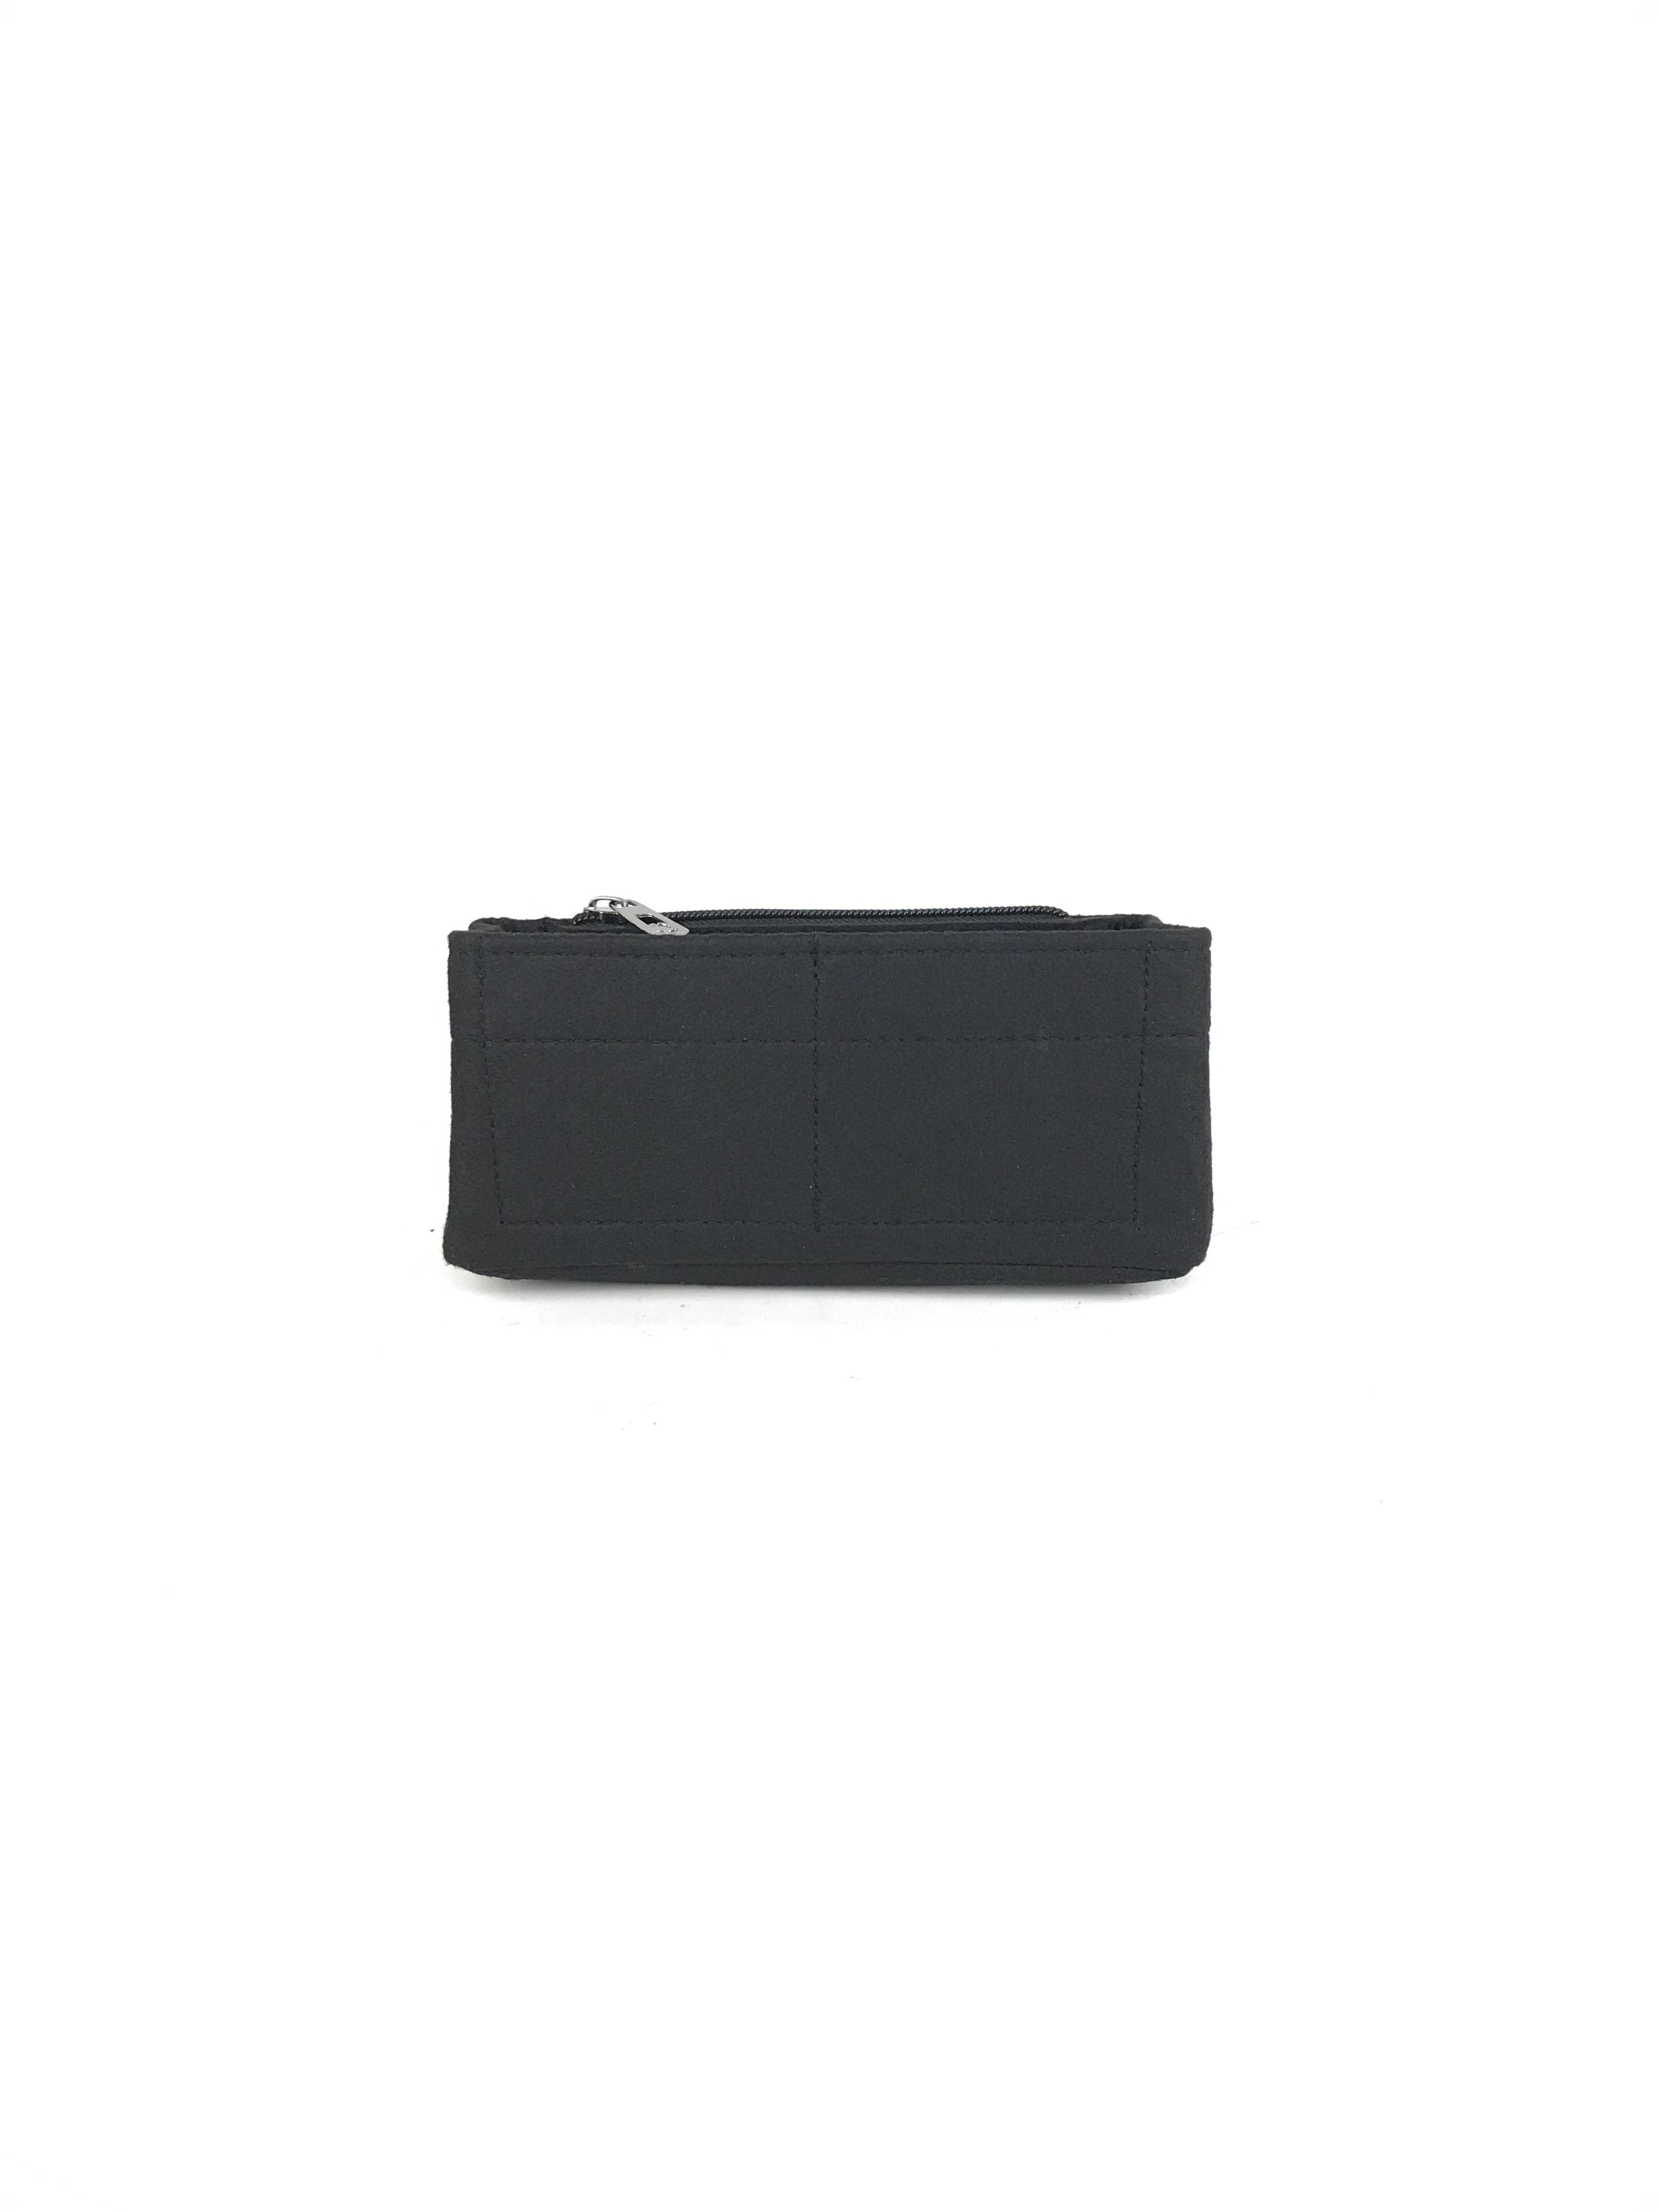 Black Chanel Rectangular Mini Felt Bag Insert/Organizer